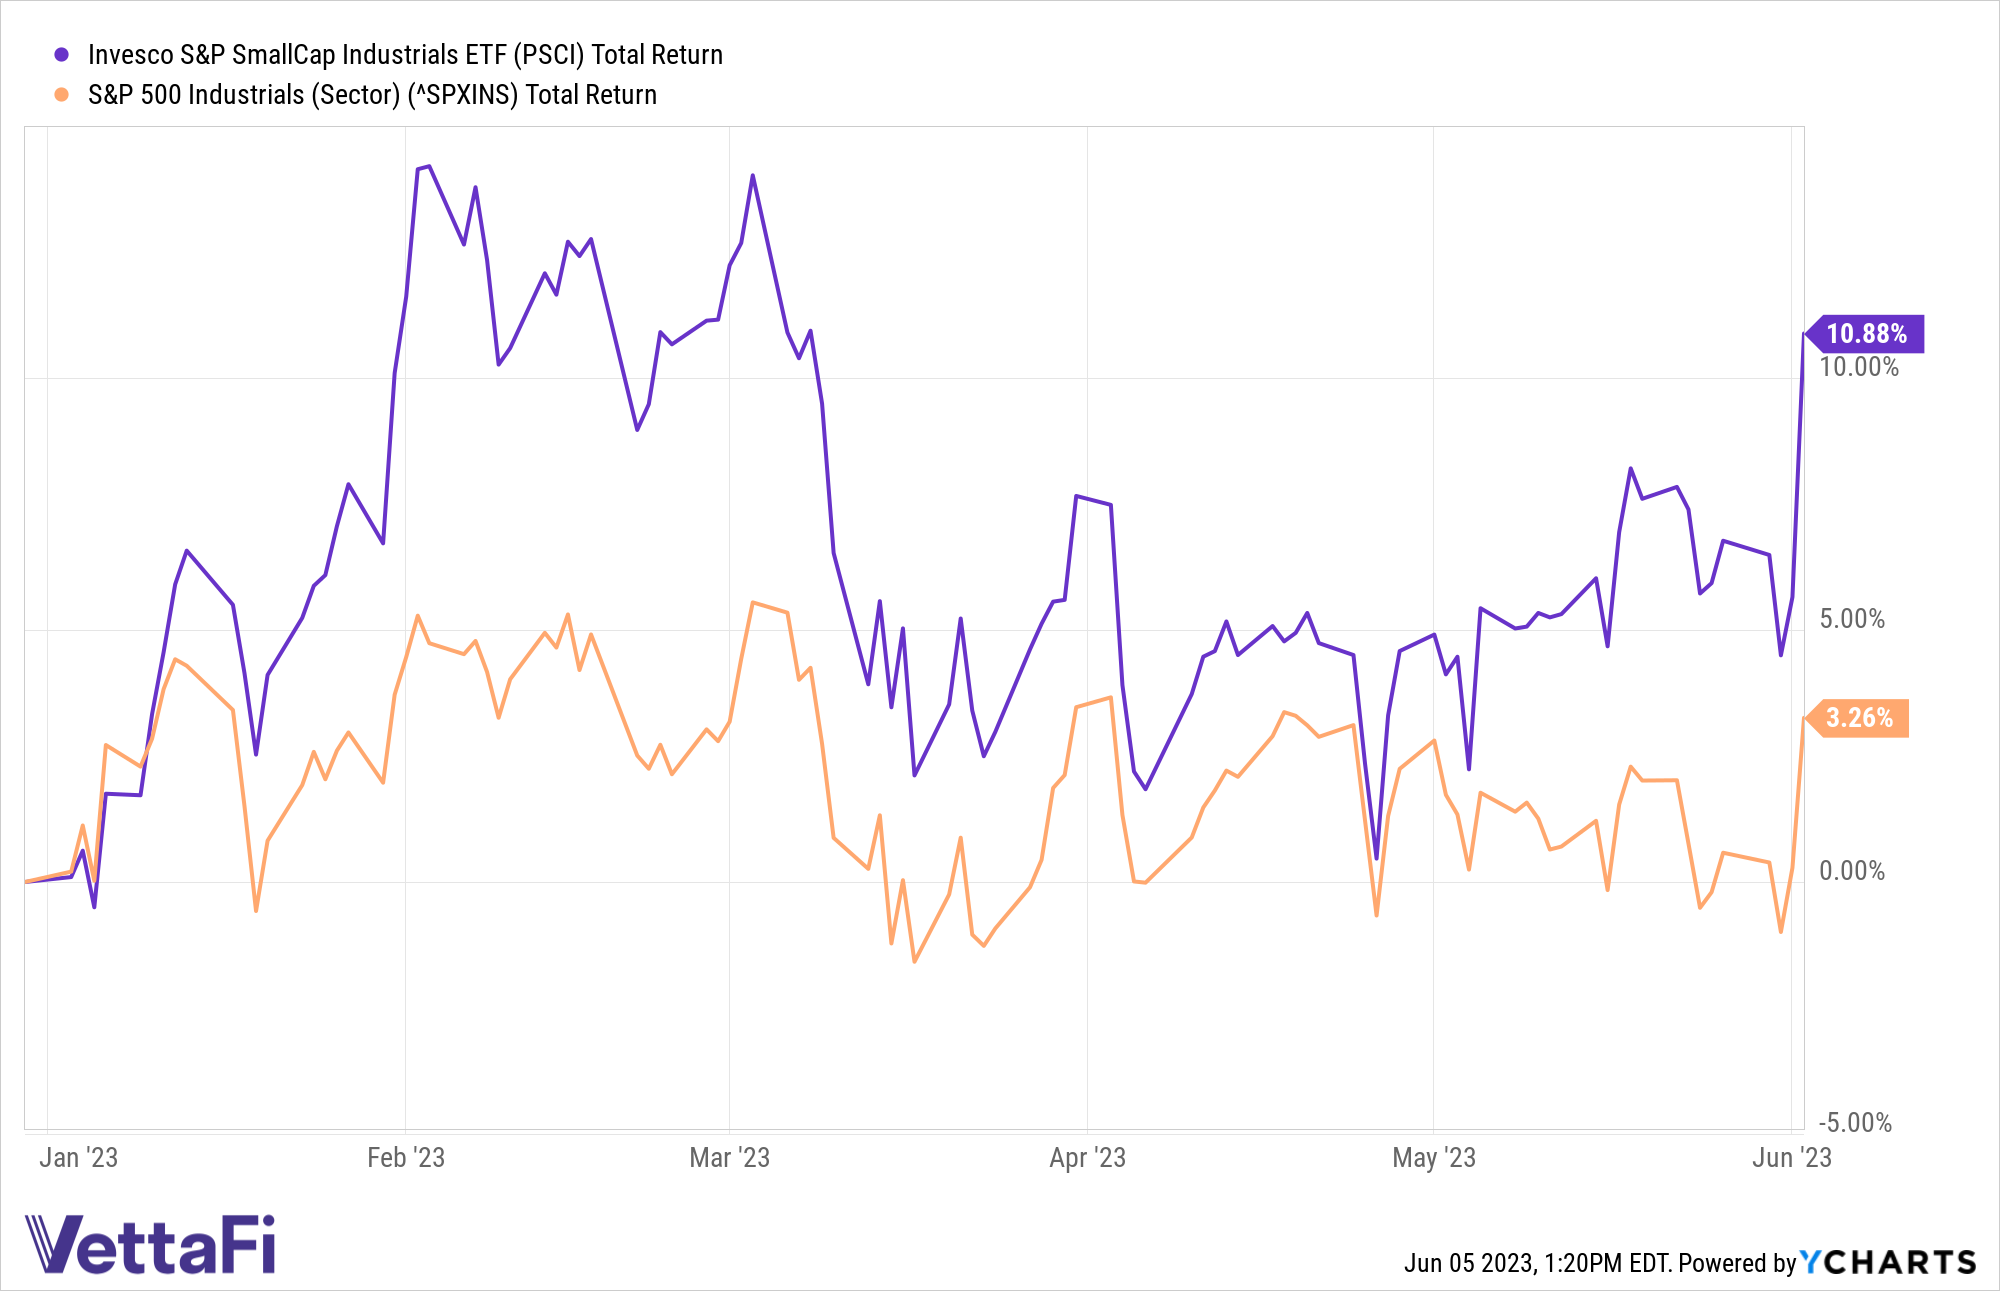 PSCI vs large cap industrials sector performance